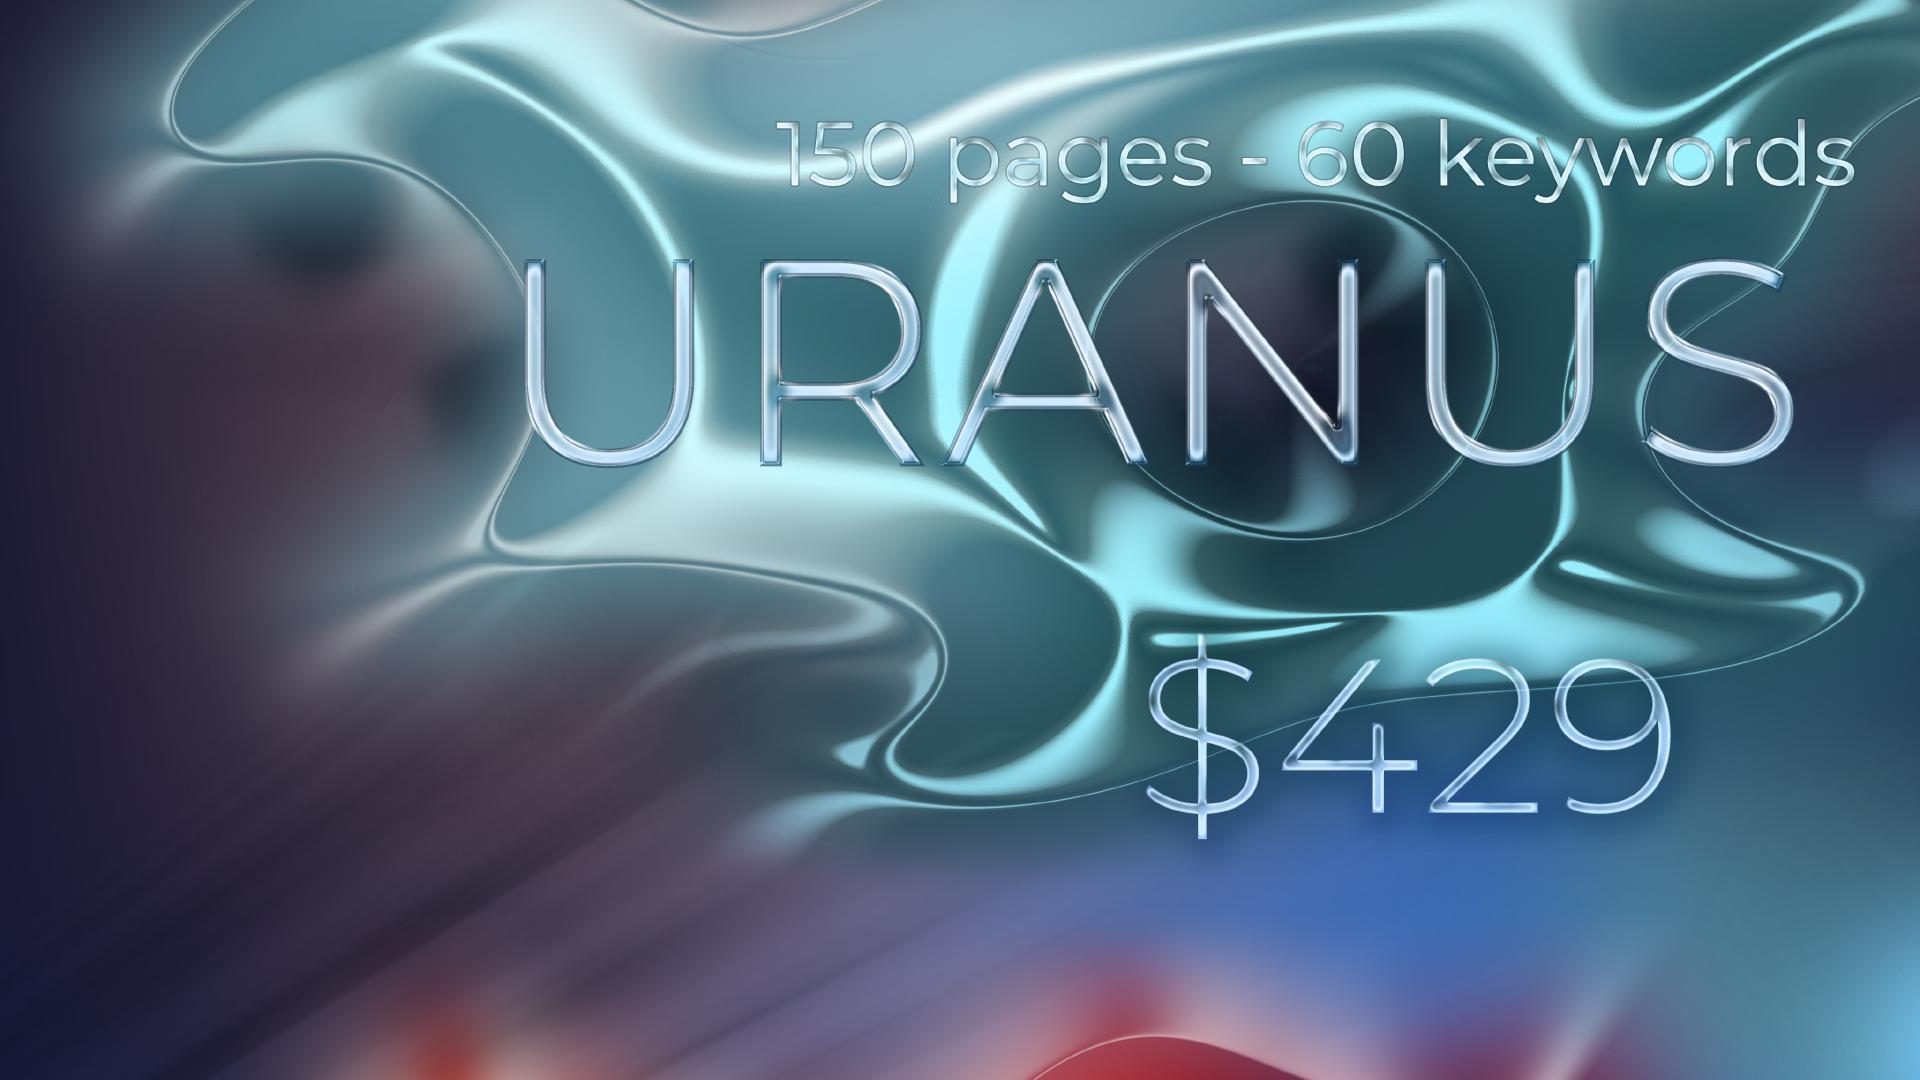 SEO package 'Uranus': 150 pages - 60 keywords for $429